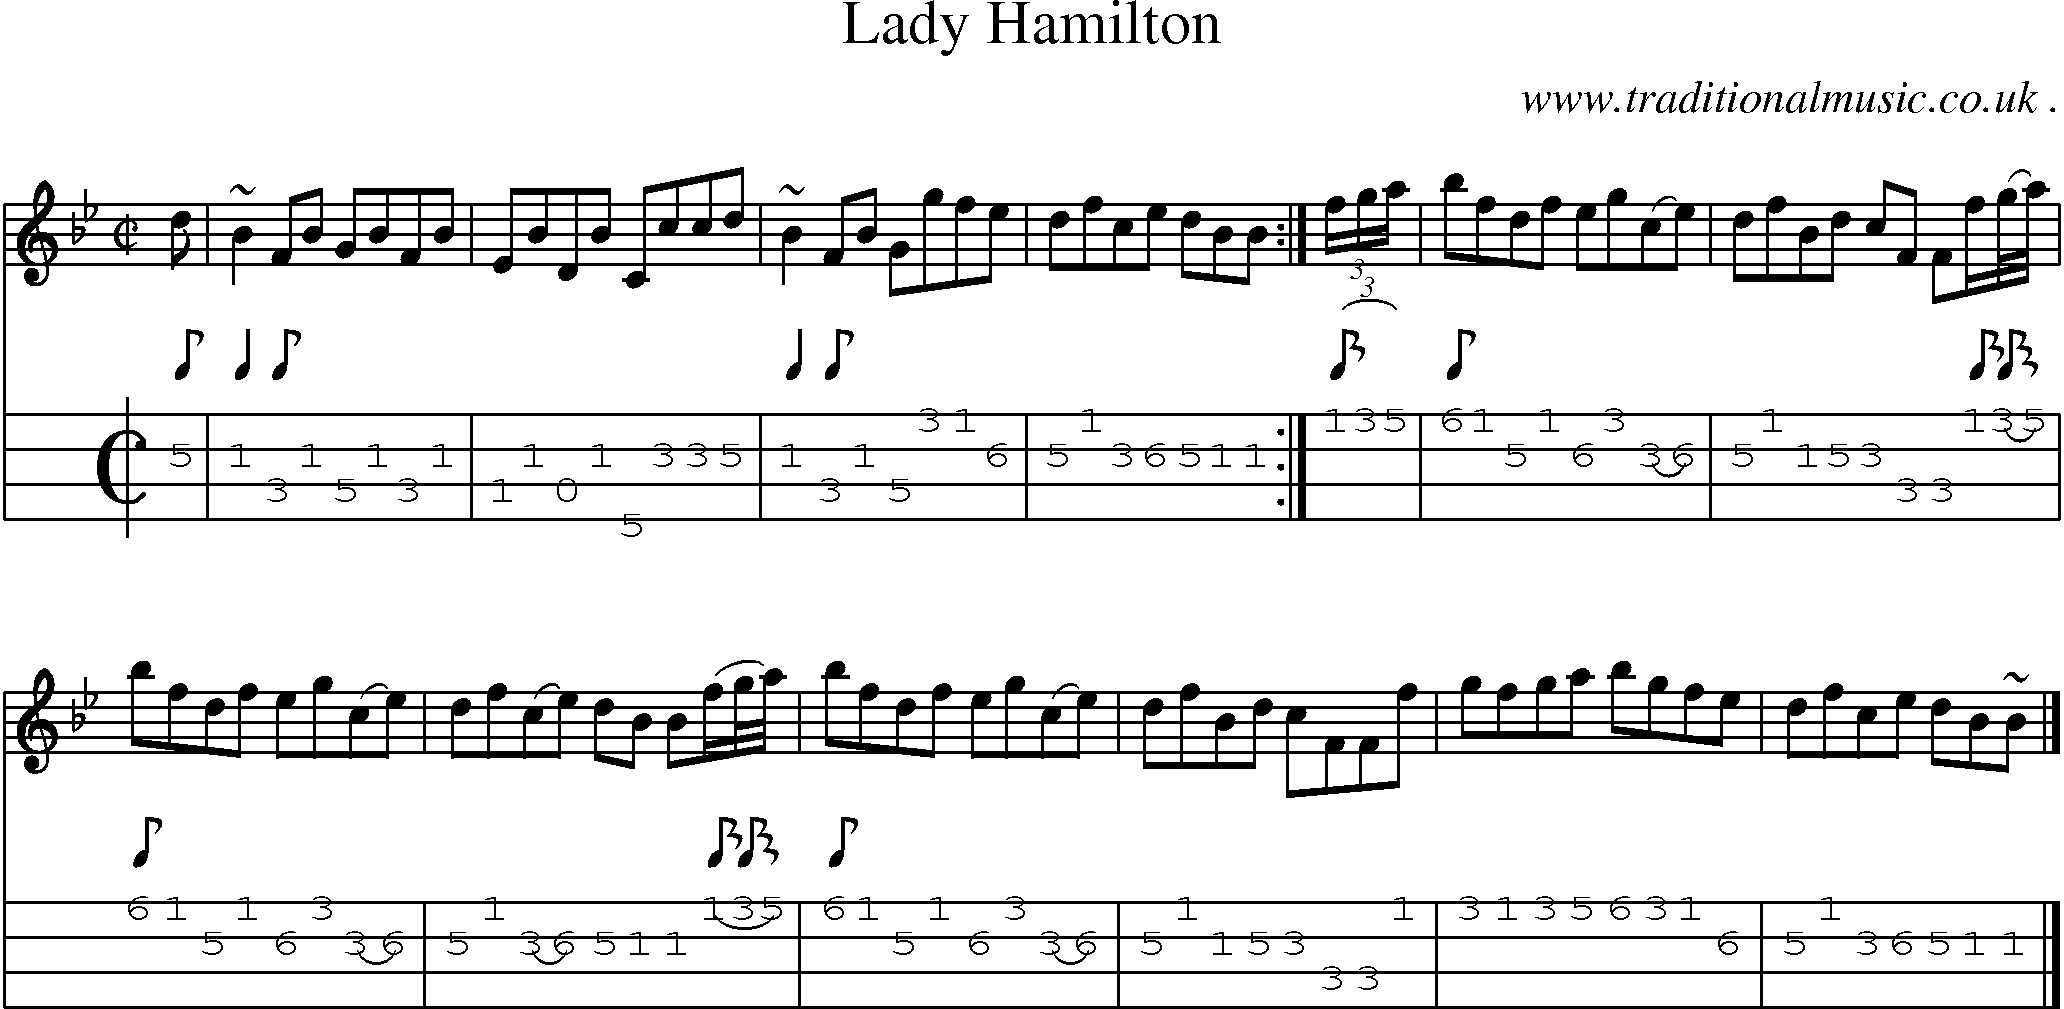 Sheet-music  score, Chords and Mandolin Tabs for Lady Hamilton